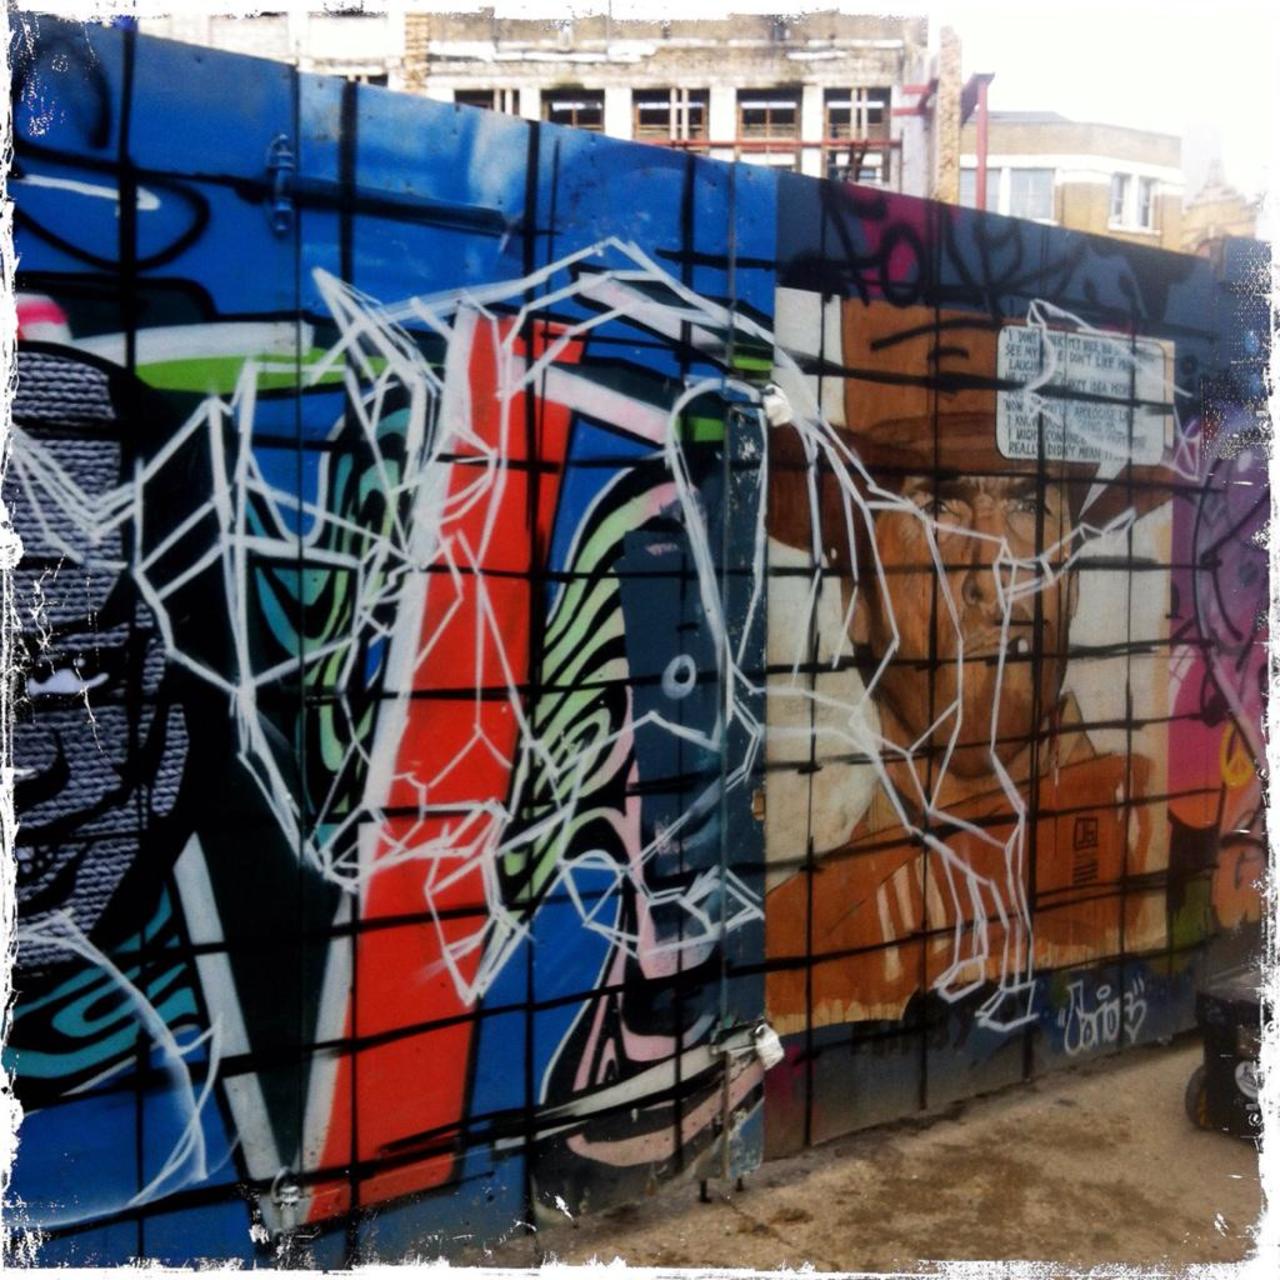 Early prelim work by @AirborneMark on Leonard Street this lunchtime #art #streetart #graffiti http://t.co/ZulGLPdh4Q